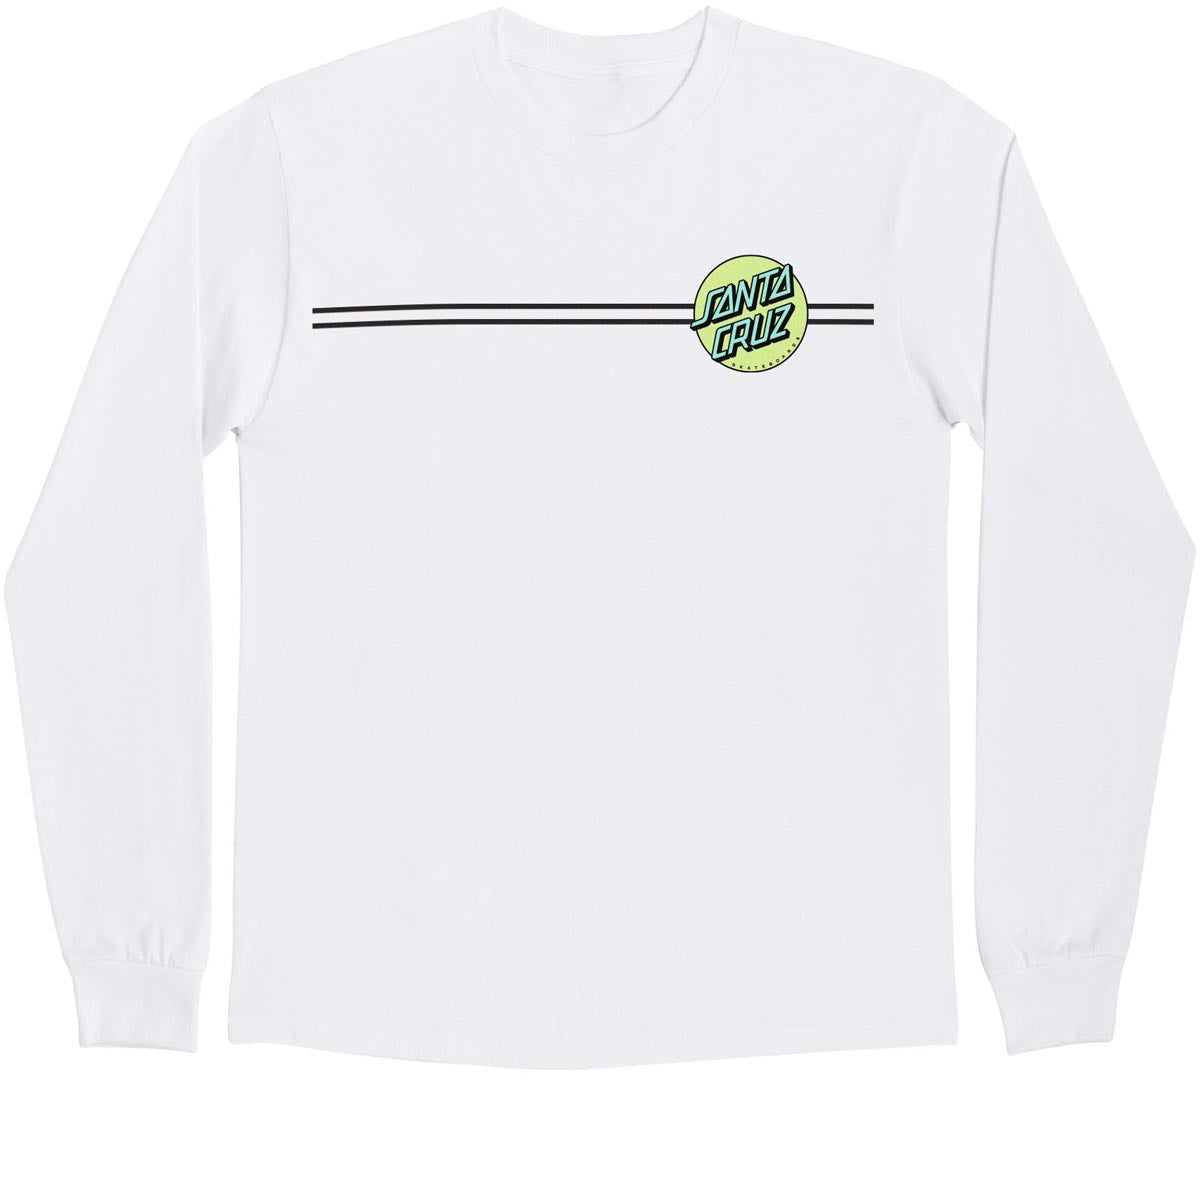 Santa Cruz Other Dot Long Sleeve T-Shirt - White/Lime image 1